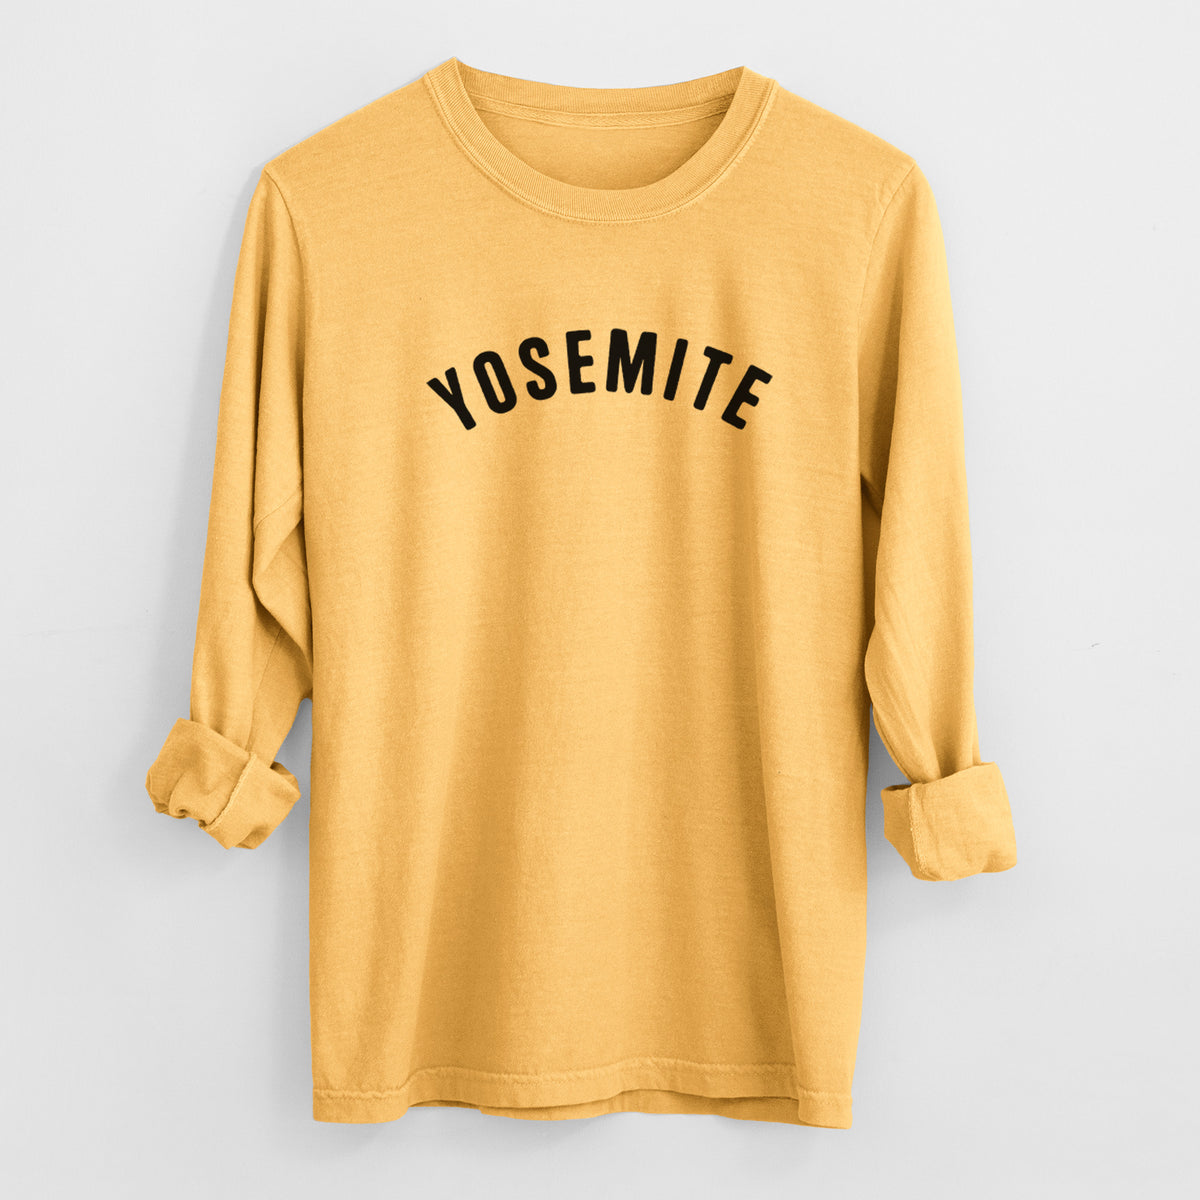 Yosemite - Heavyweight 100% Cotton Long Sleeve